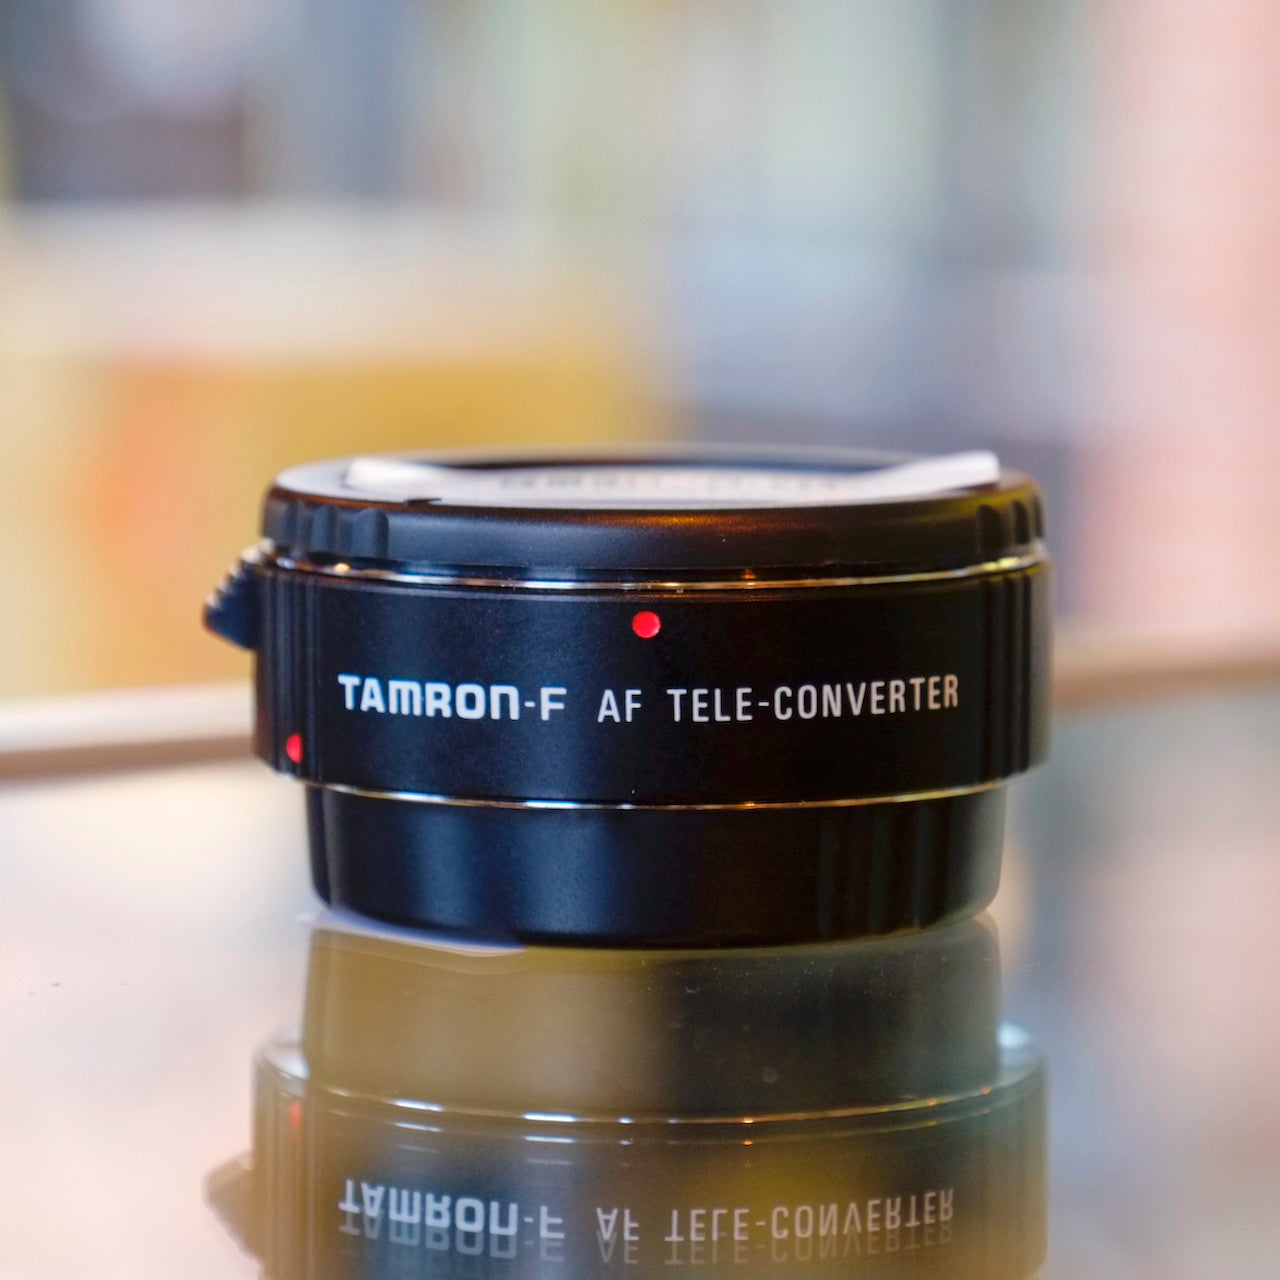 Tamron-F 1.4x C-AF1 MC4 teleconverter for Canon EF